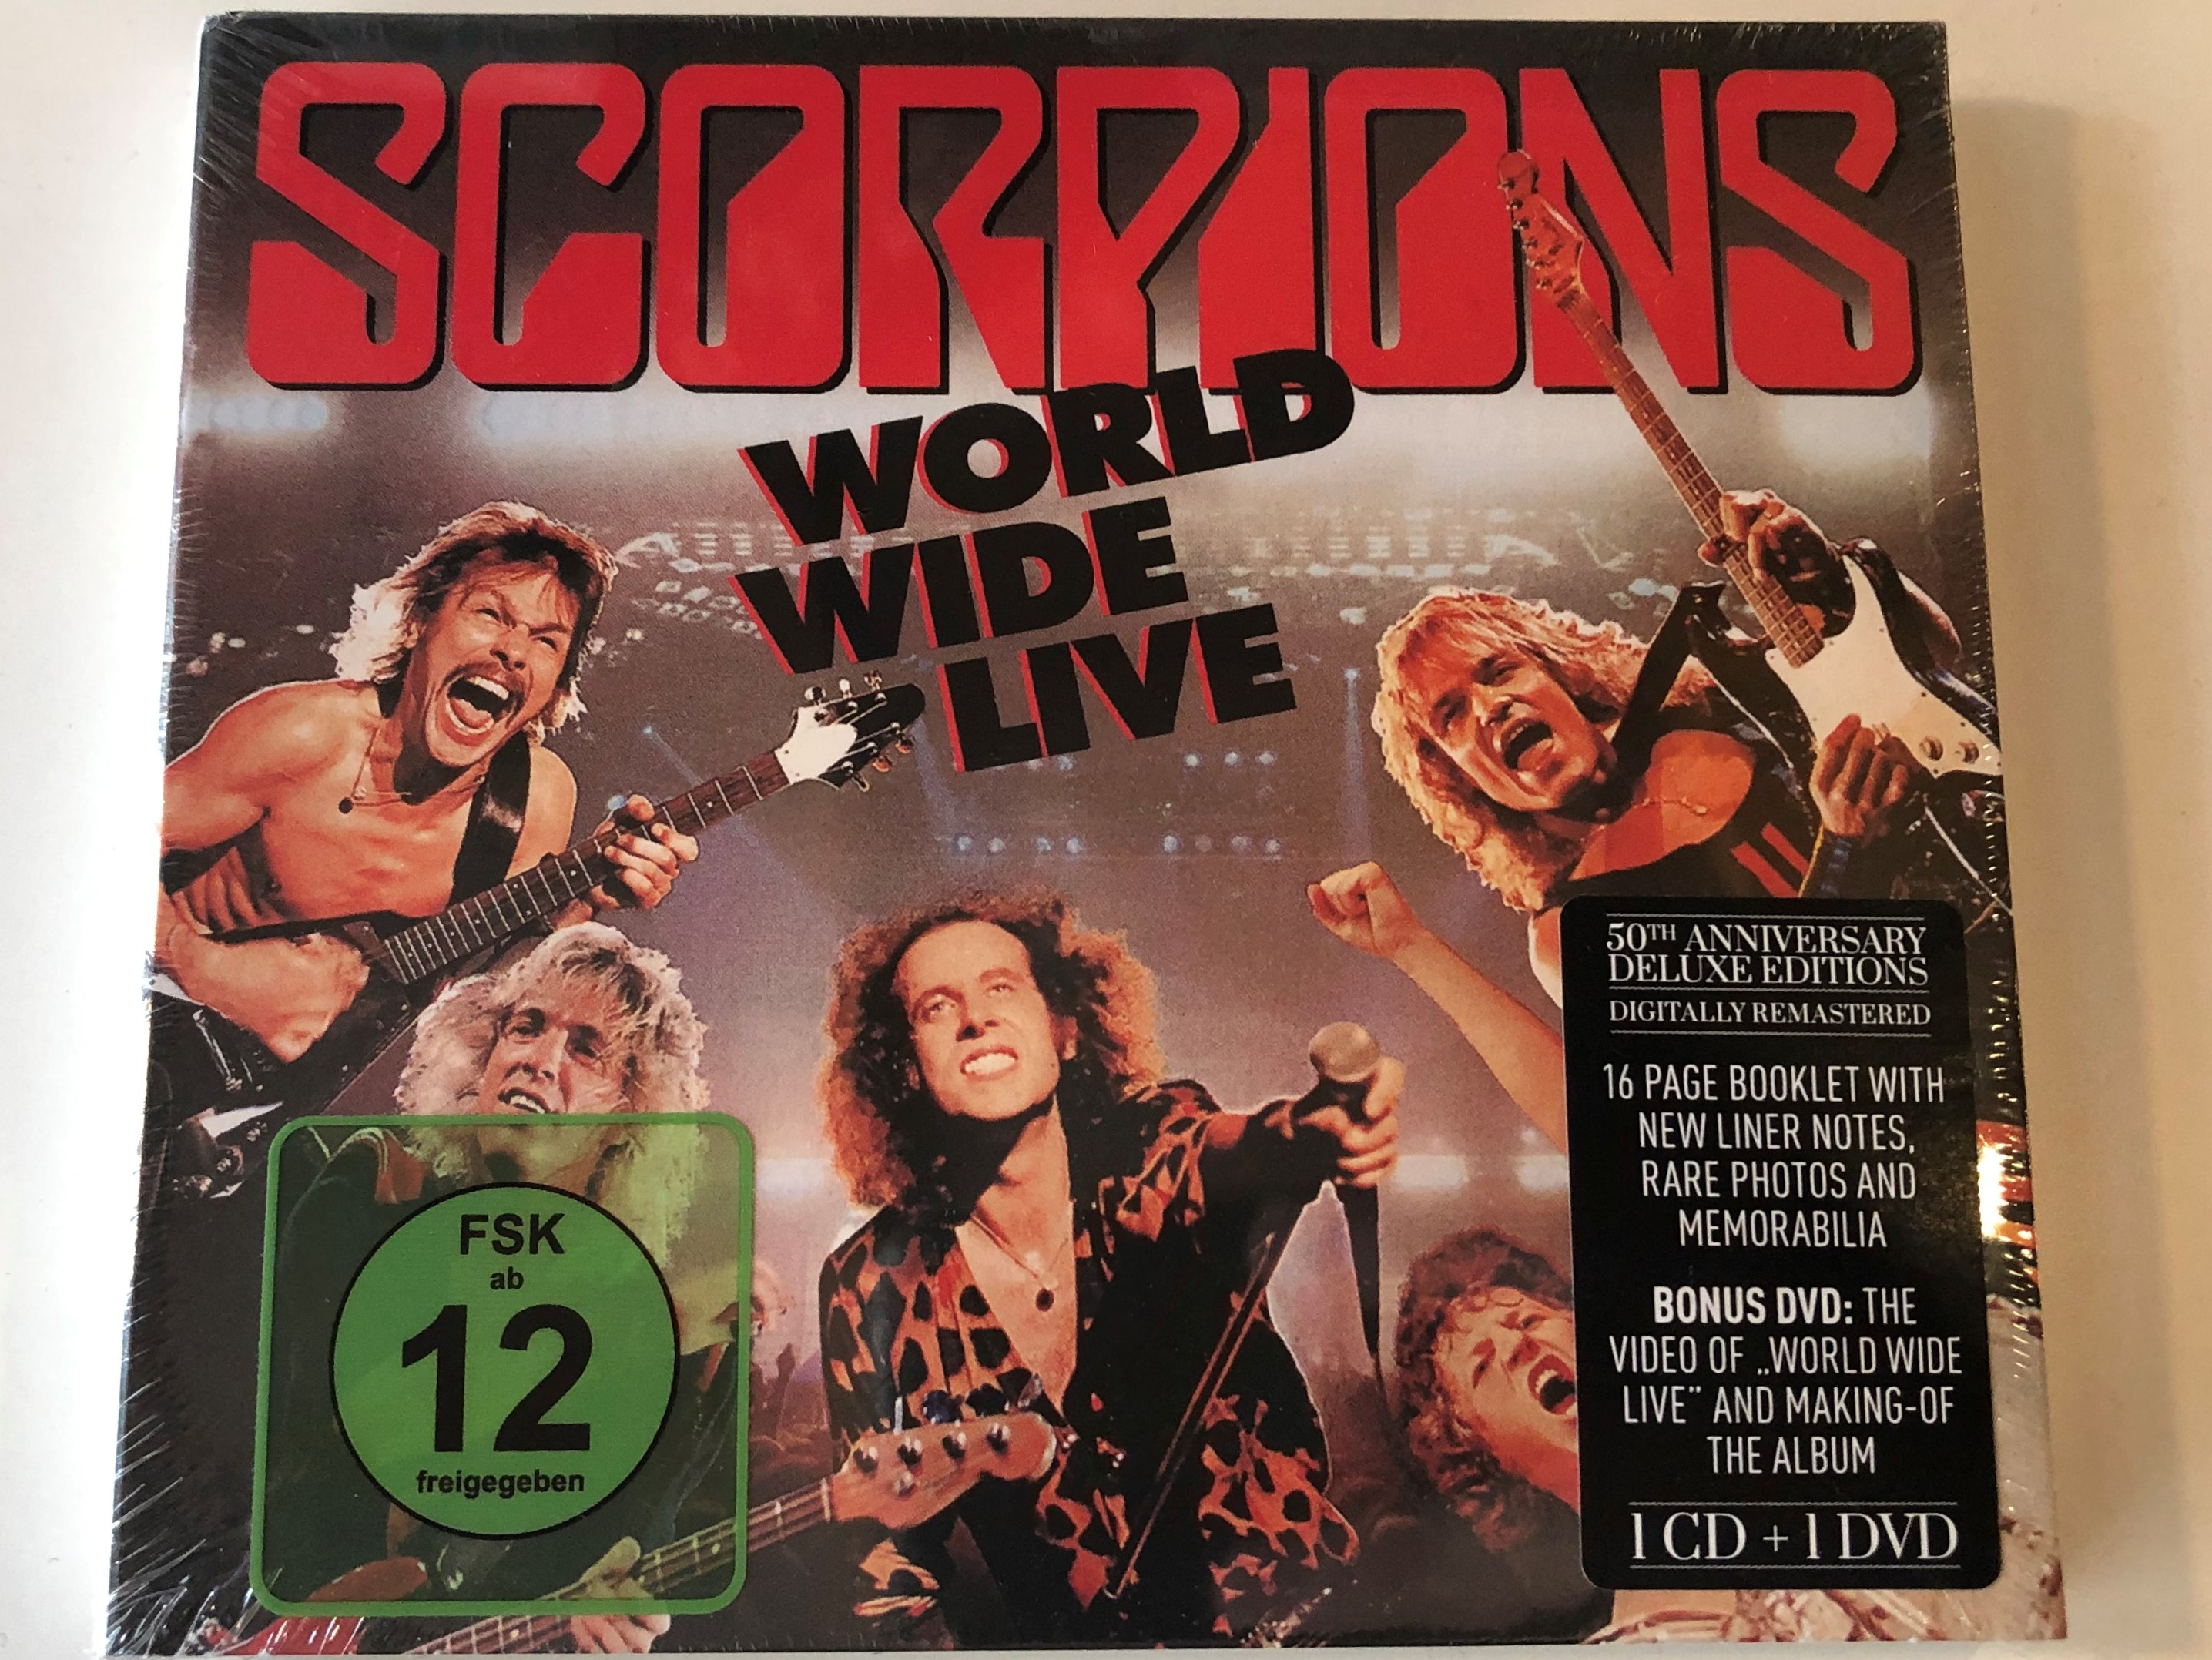 Scorpions world